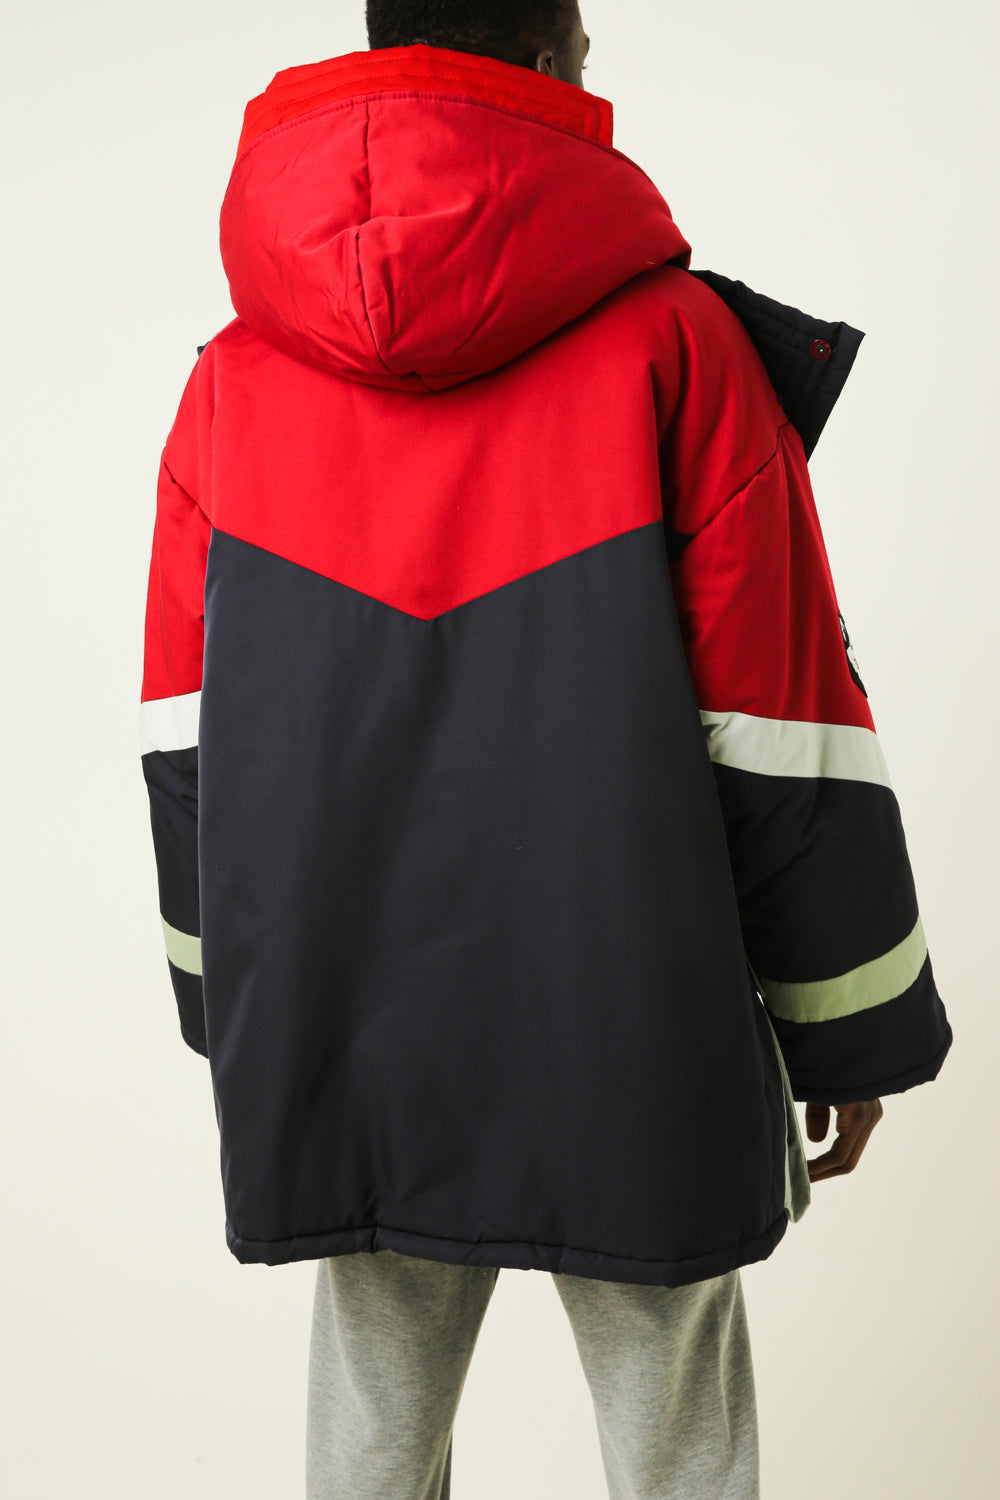 Warm oversized jacket with a hood